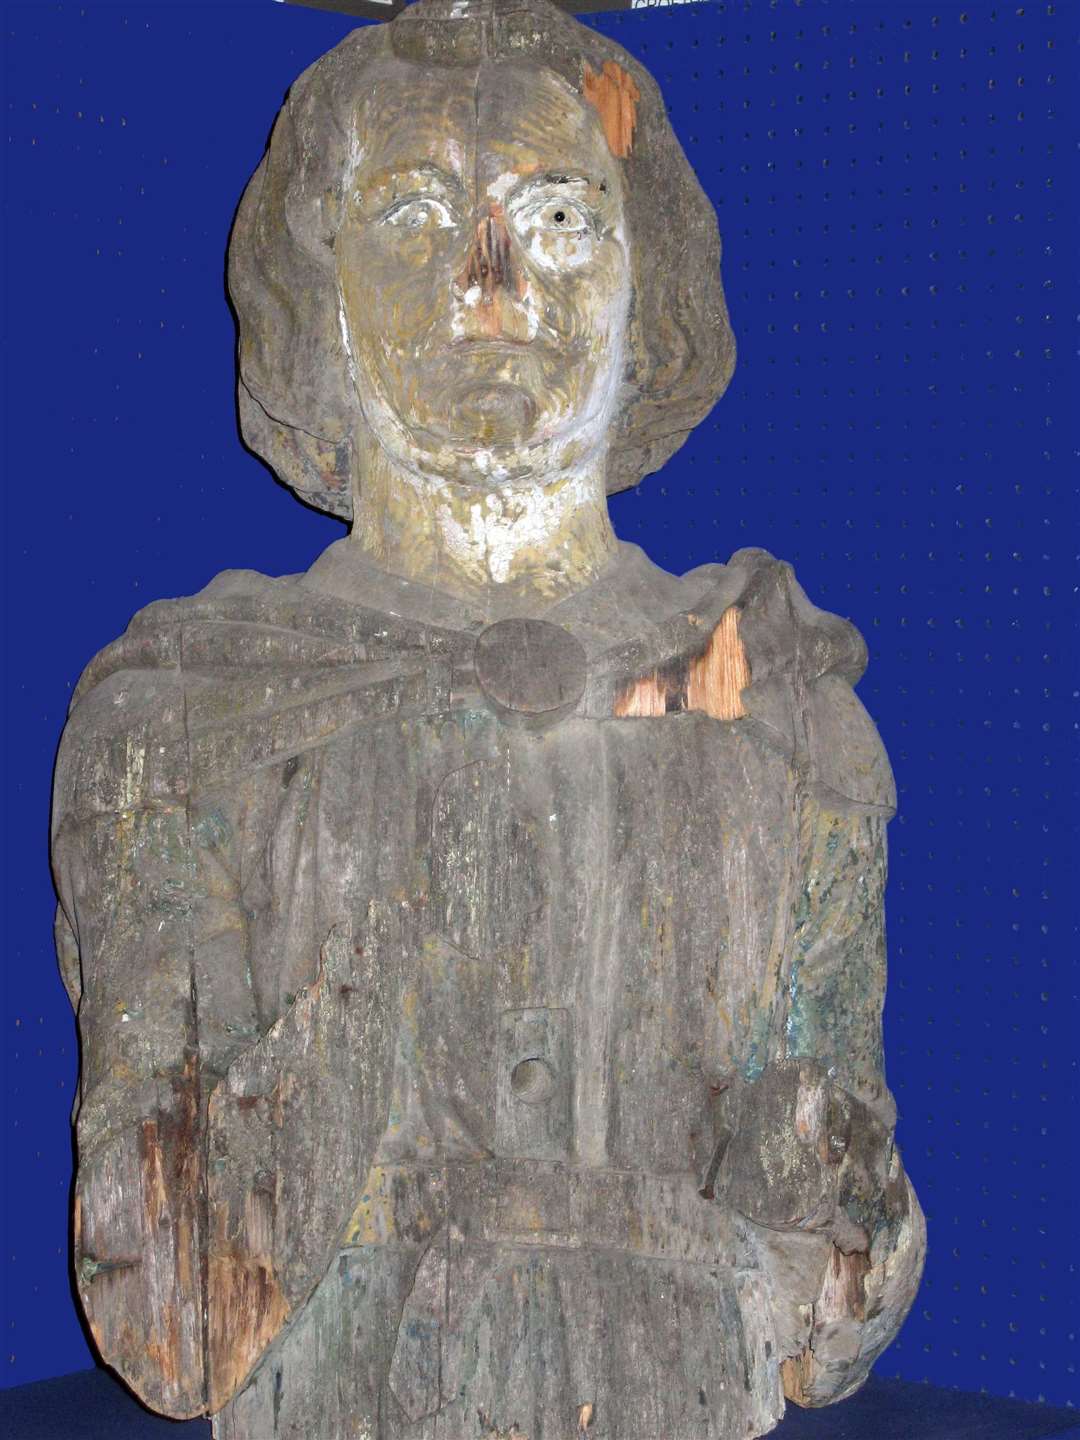 The figurehead of the Thorvaldsen is displayed in Strathnaver Museum.